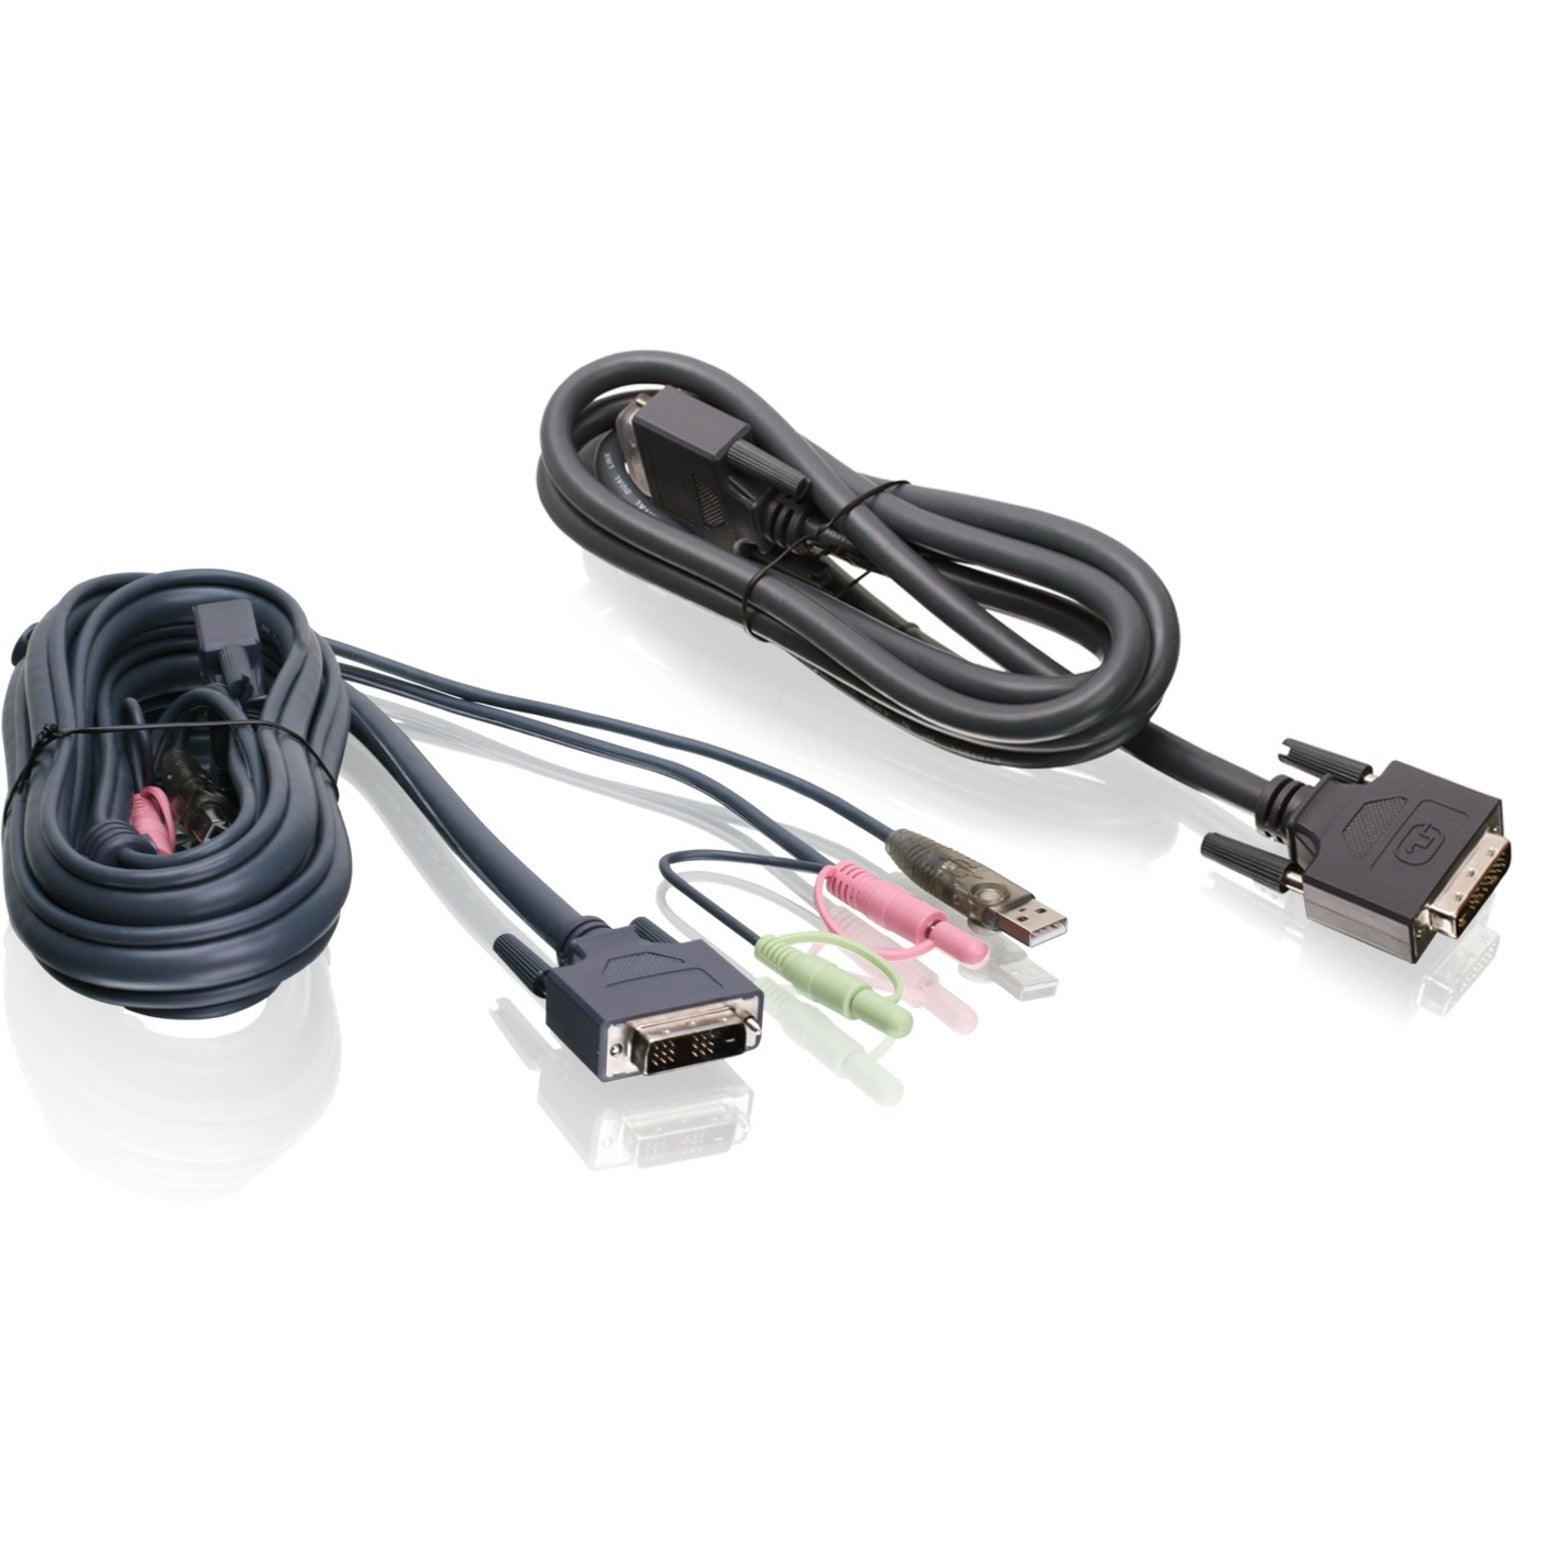 IOGEAR G2L7202U 6ft Dual View Dual-Link DVI, USB KVM Cable Kit with Audio, TAA Compliant